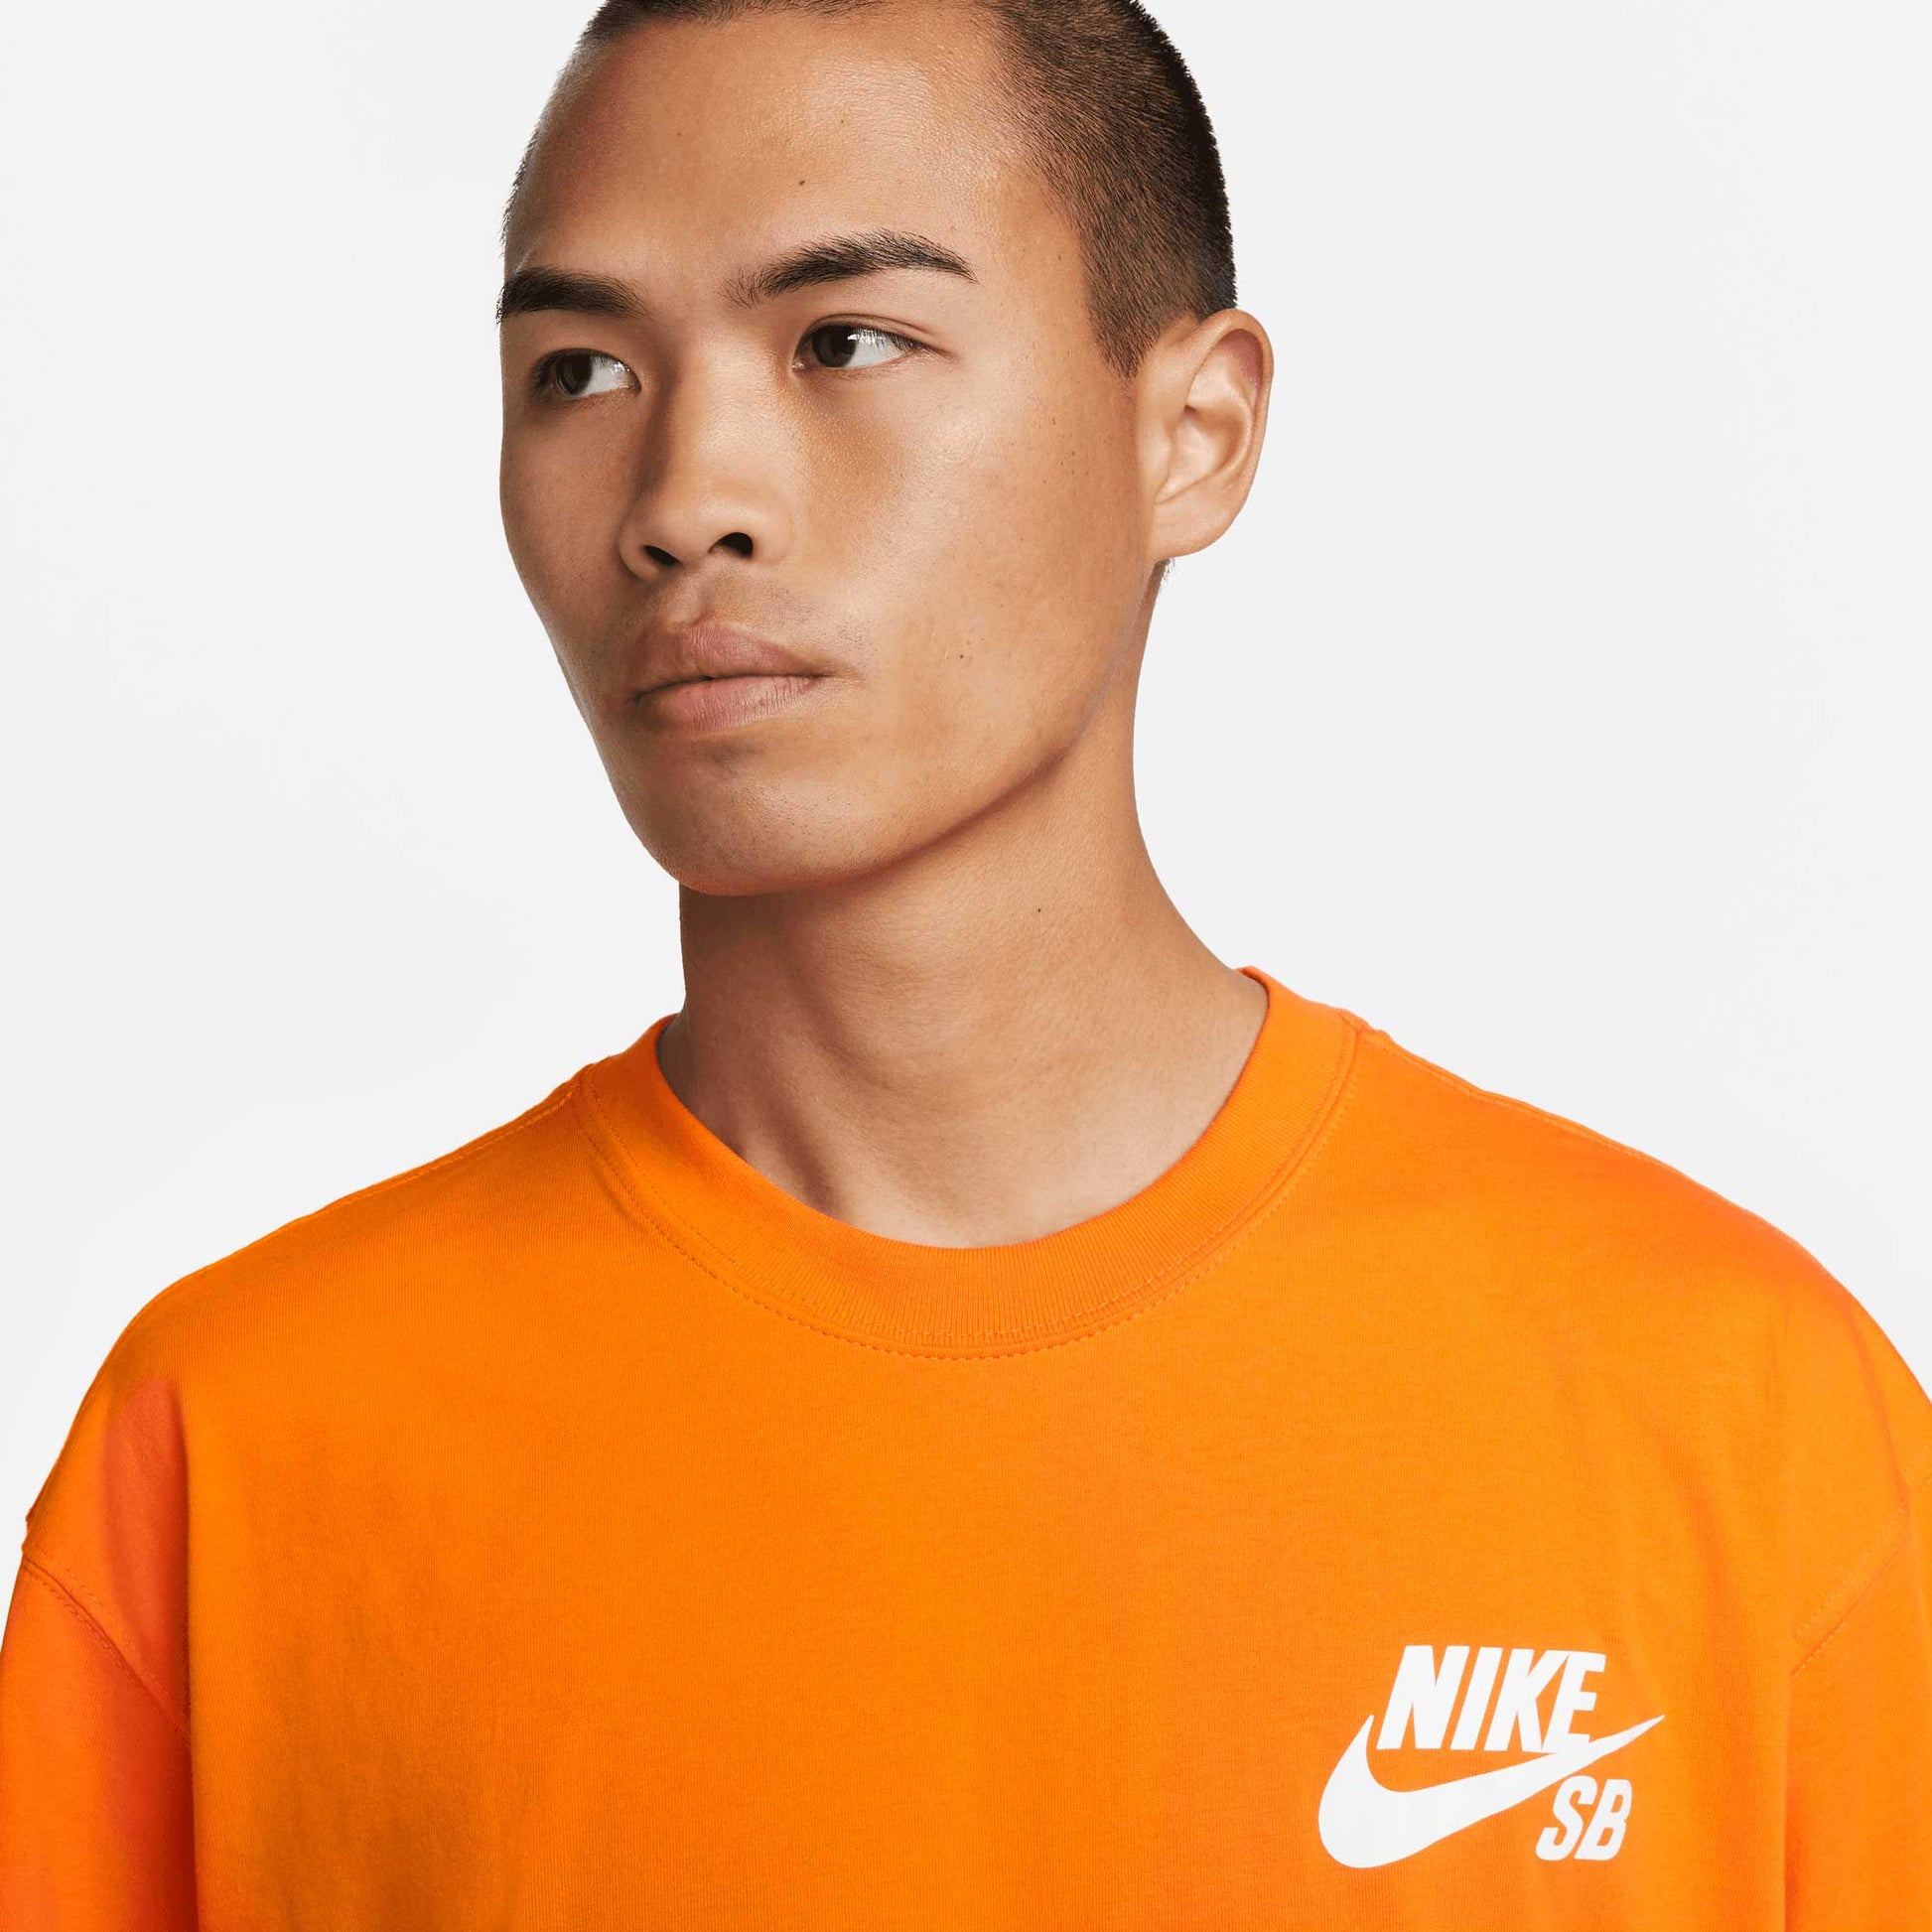 Nike SB Logo Skate T-Shirt, safety orange - Tiki Room Skateboards - 4